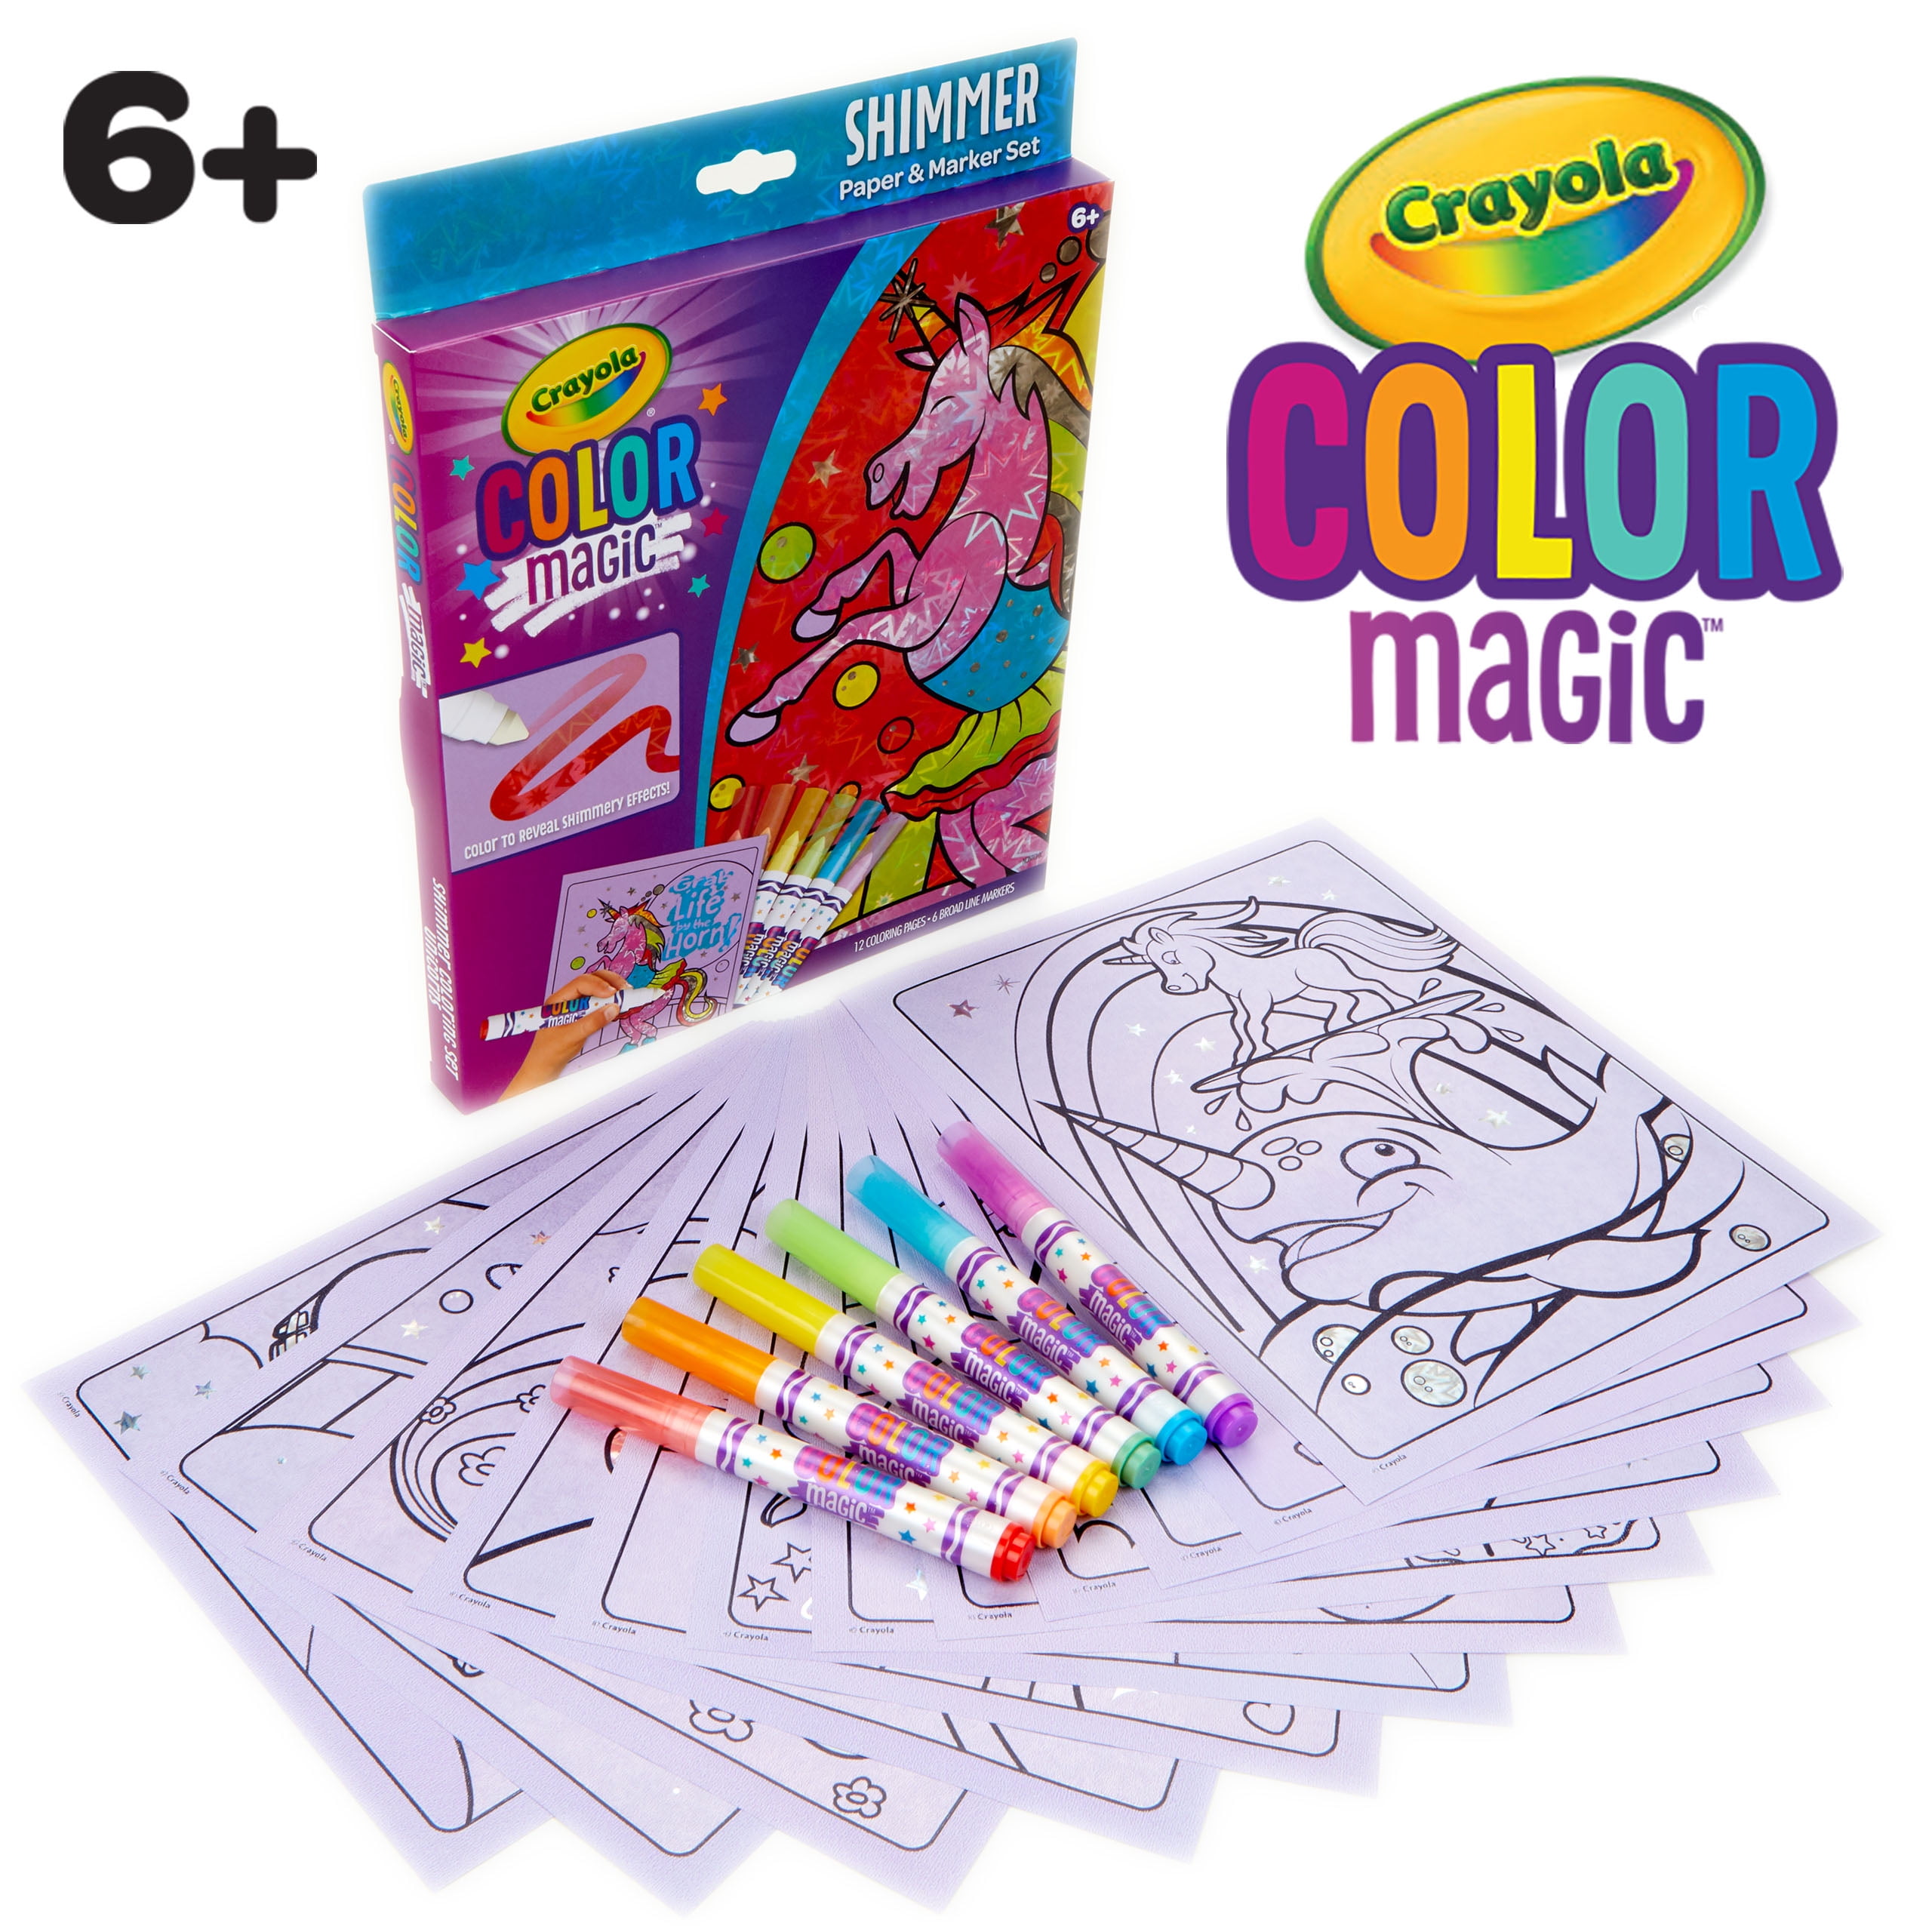 Crayola Color Magic Unicorn Shimmer Paper & Marker Coloring Set